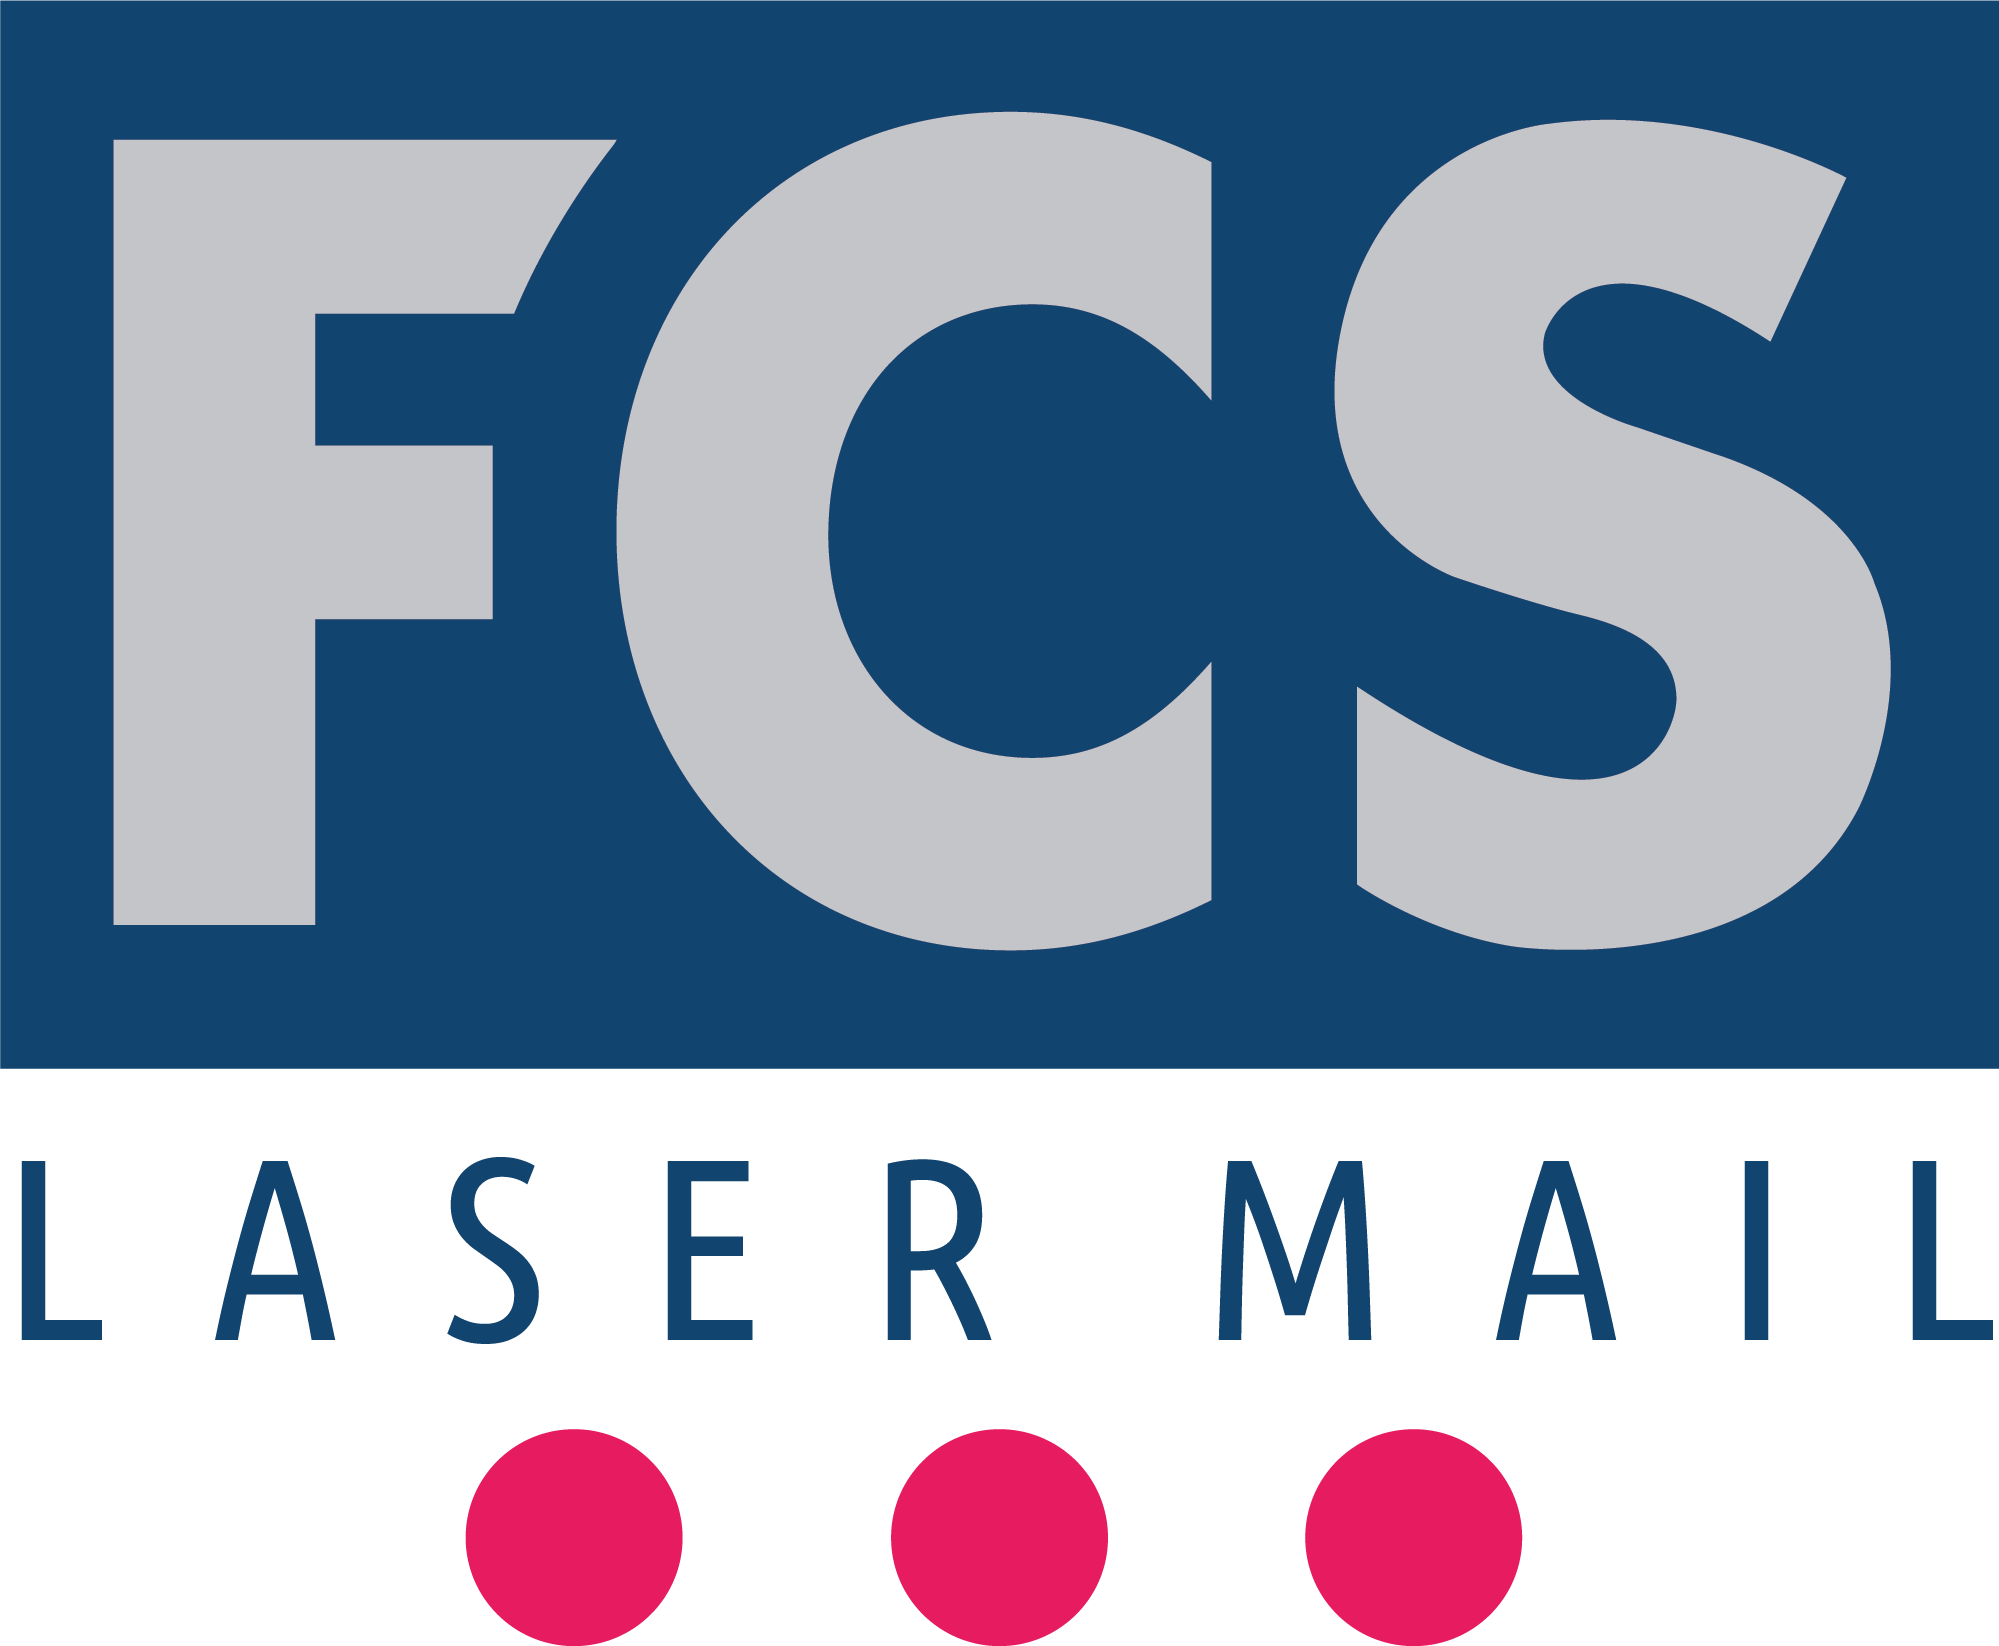 FCS Lasermail New Blue.png